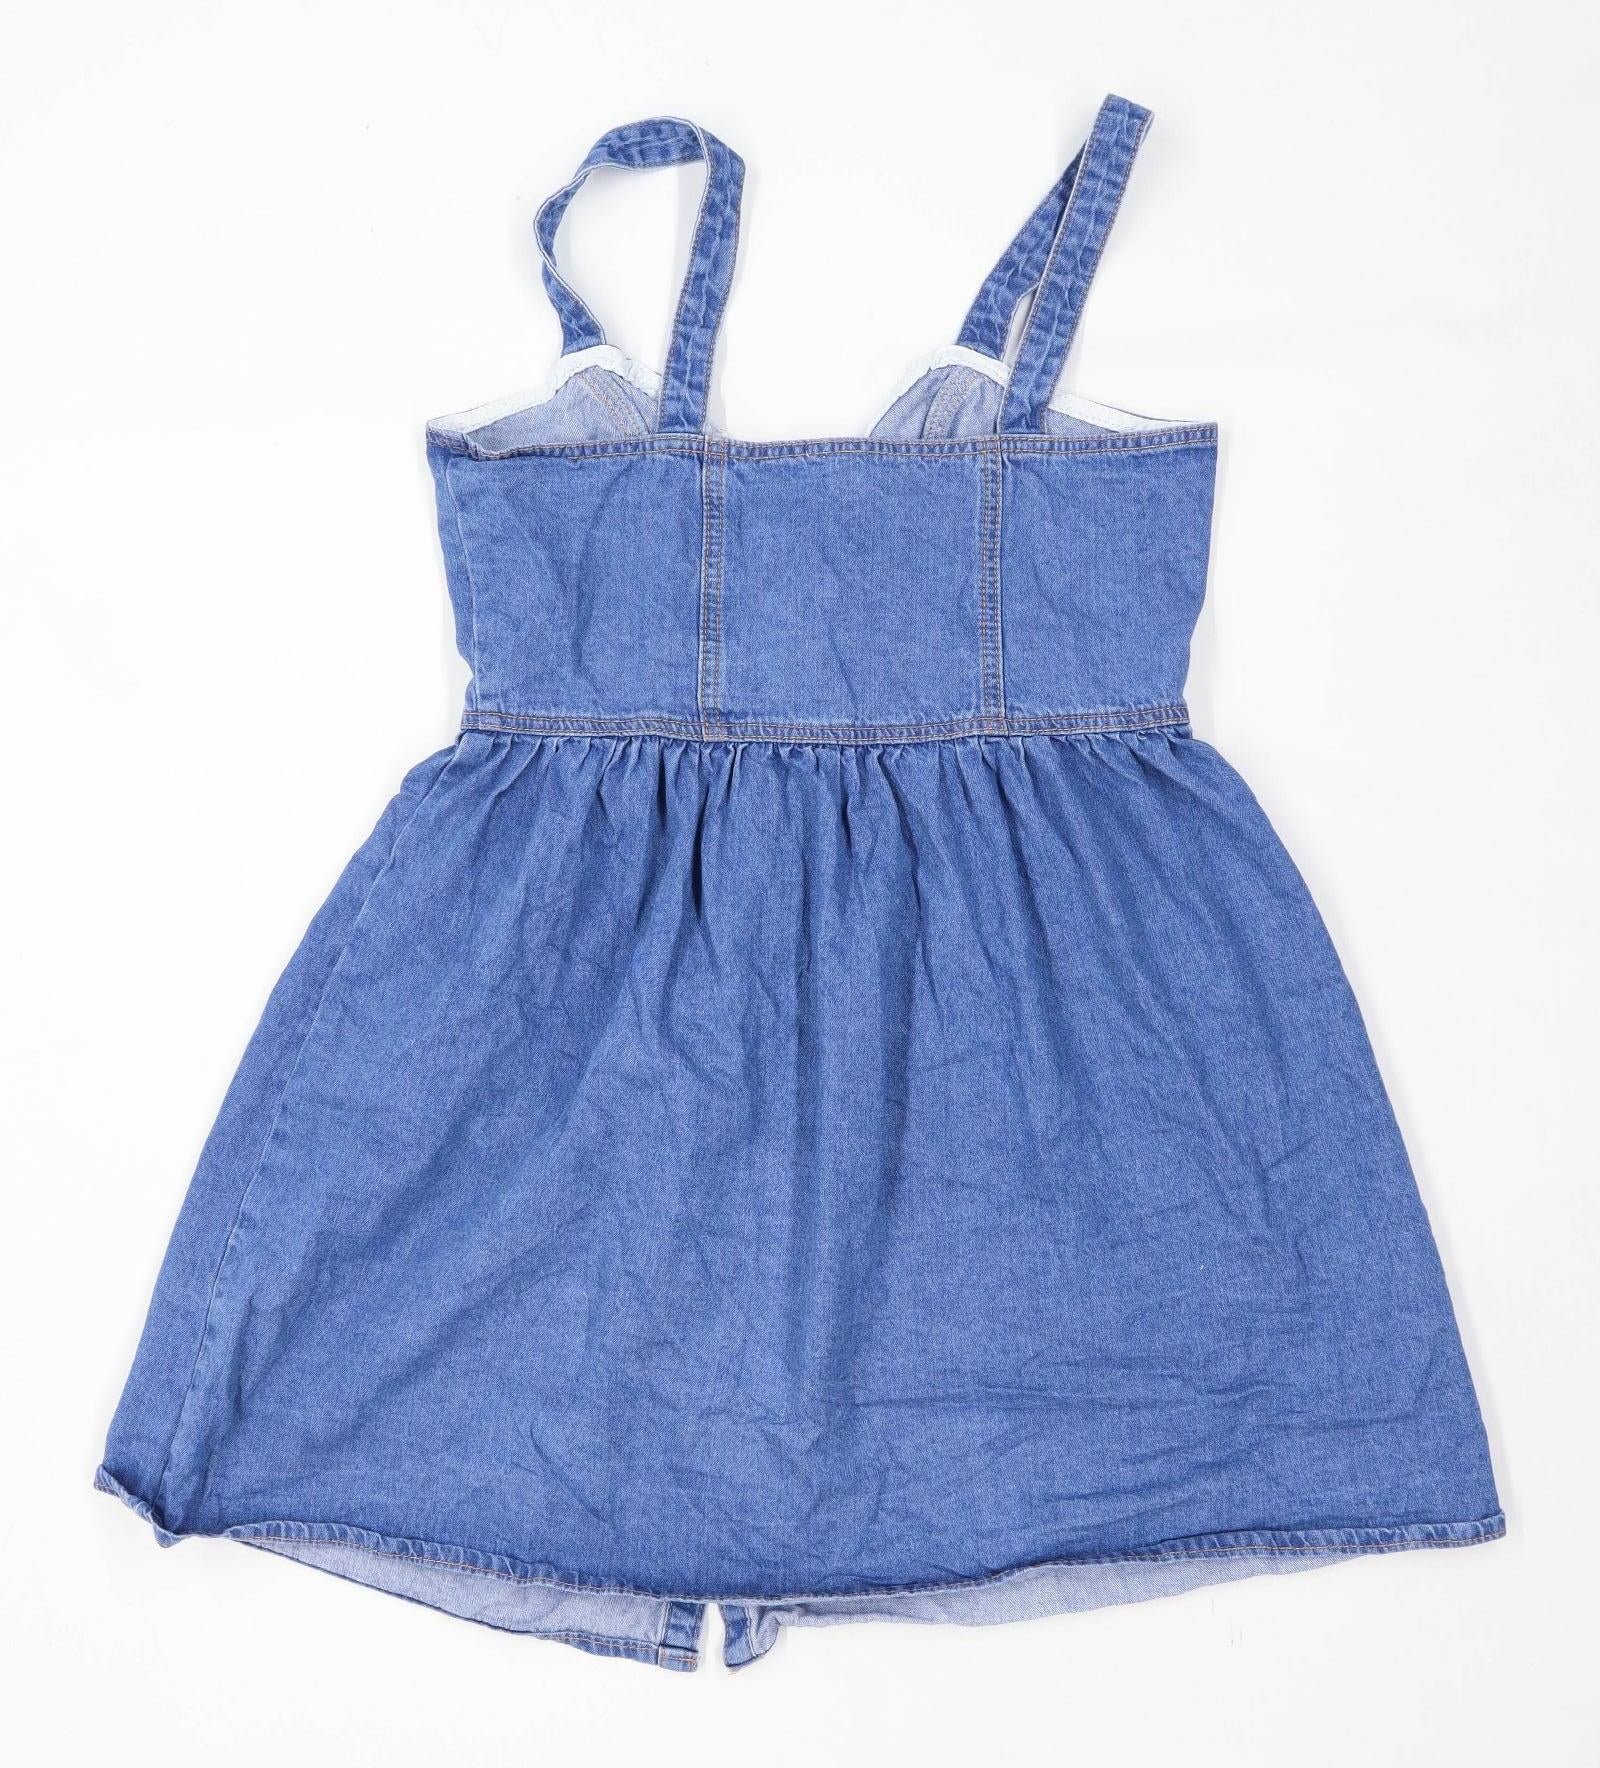 MINKPINK Andy - Medium Wash Dress - Denim Dress - Overall Dress - Lulus